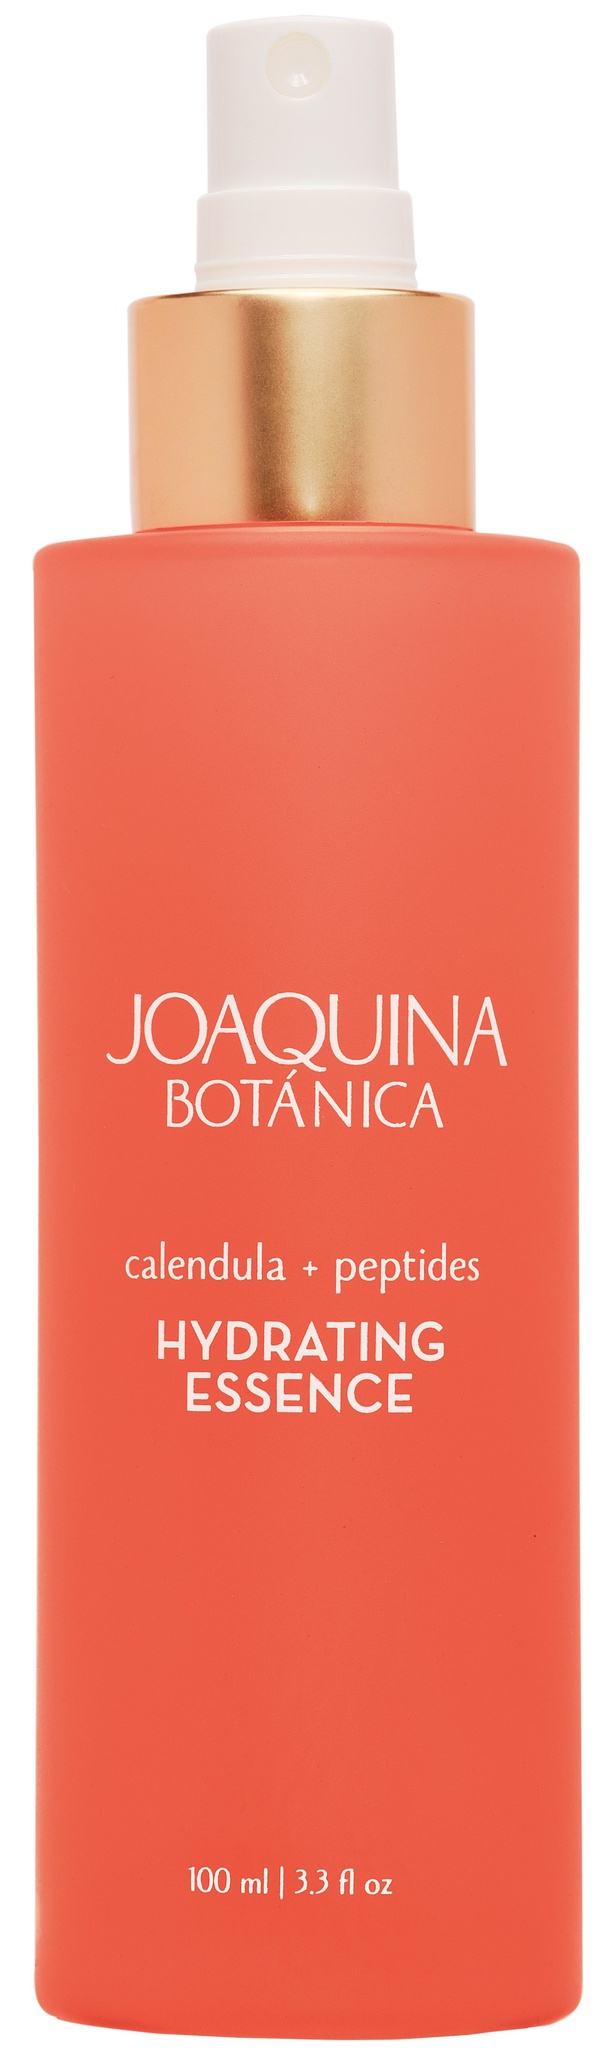 Joaquina Botánica Hydrating Essence